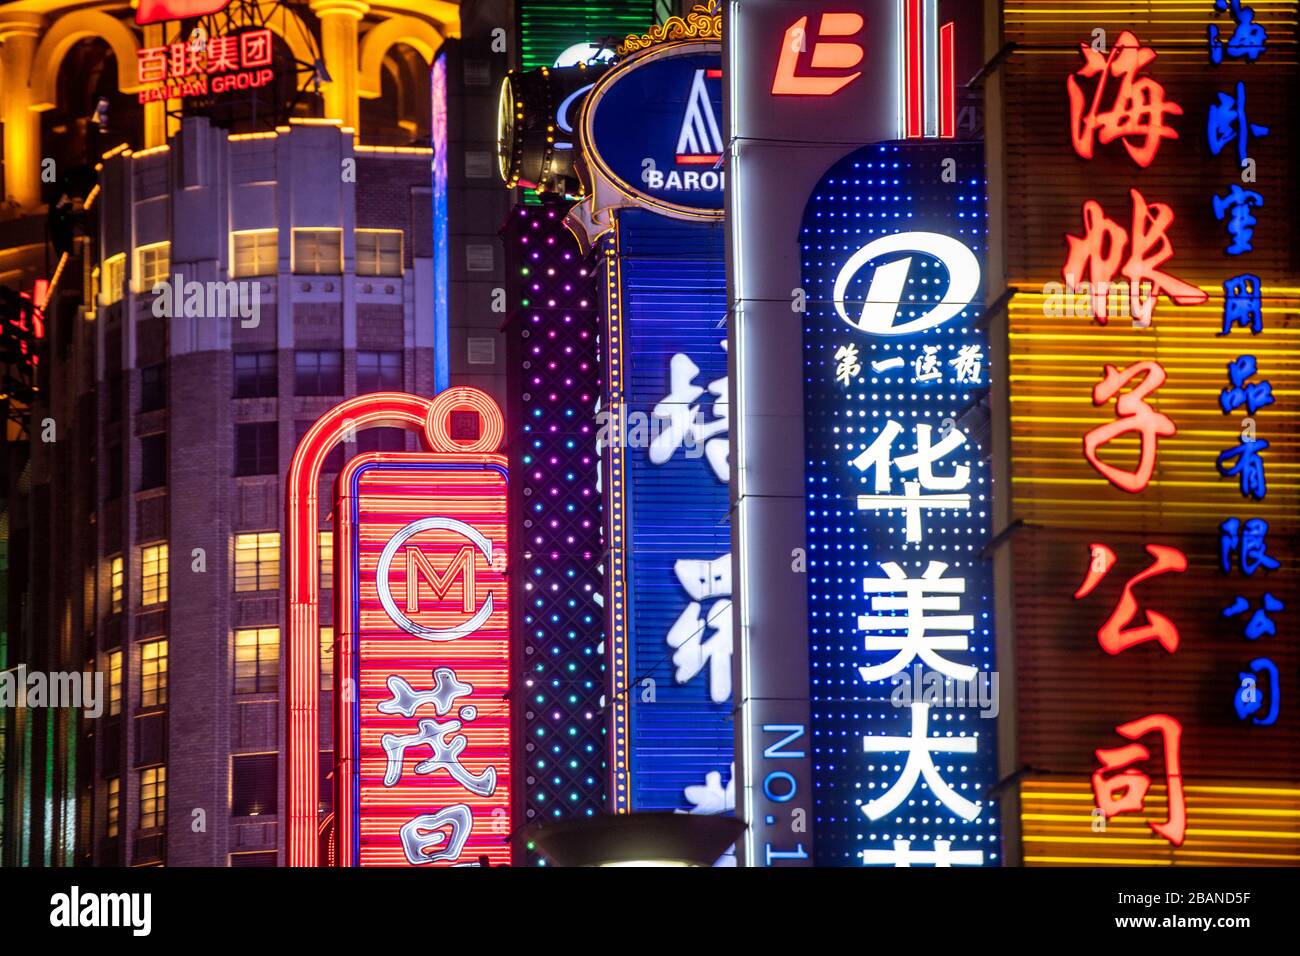 The flashy neon lights at Nanjing Road in Shanghai, China. Stock Photo